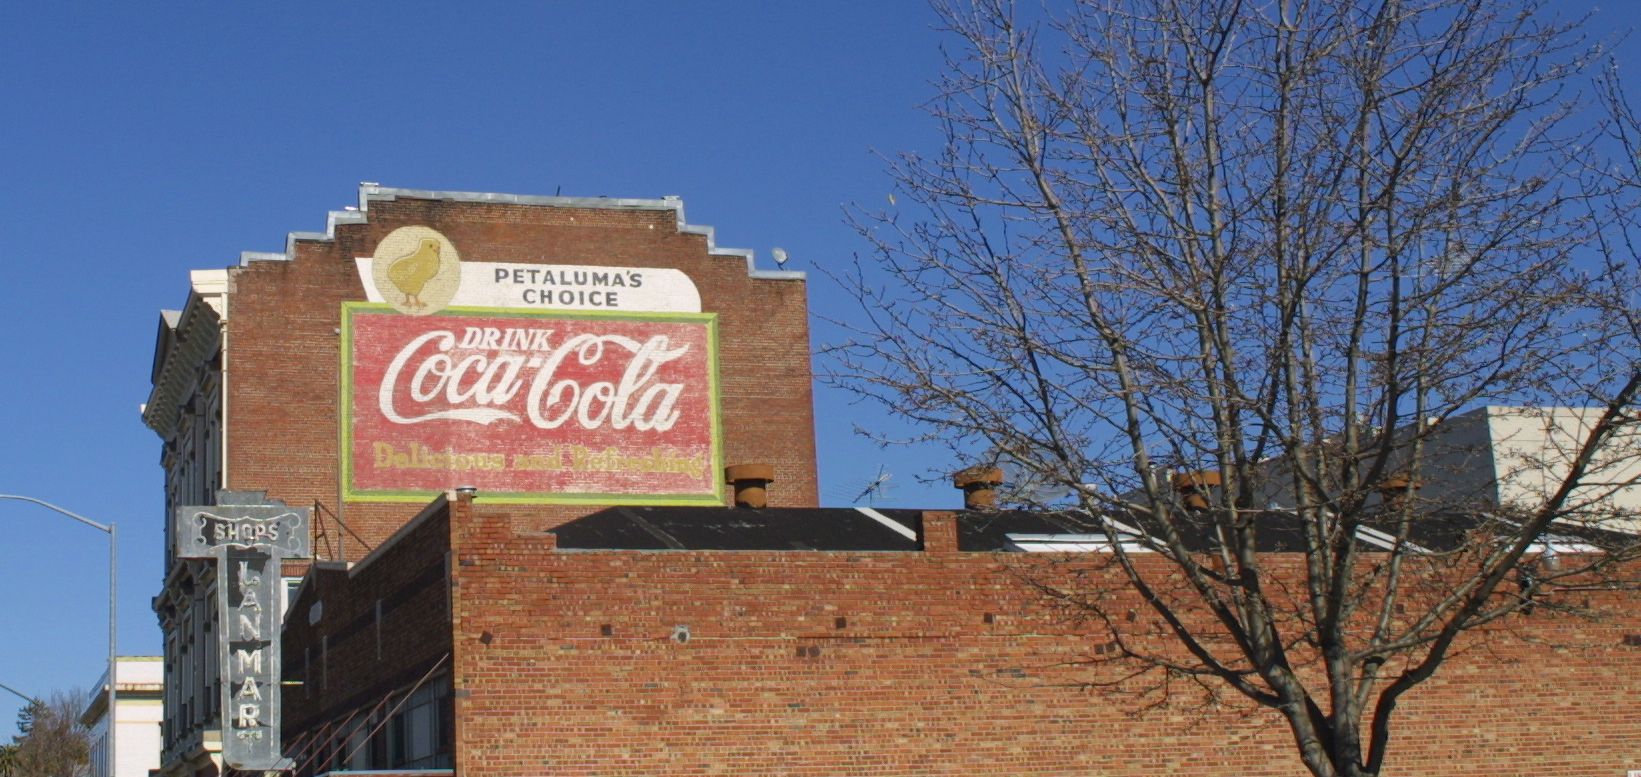 Photo of vintage Coca-Cola sign on building